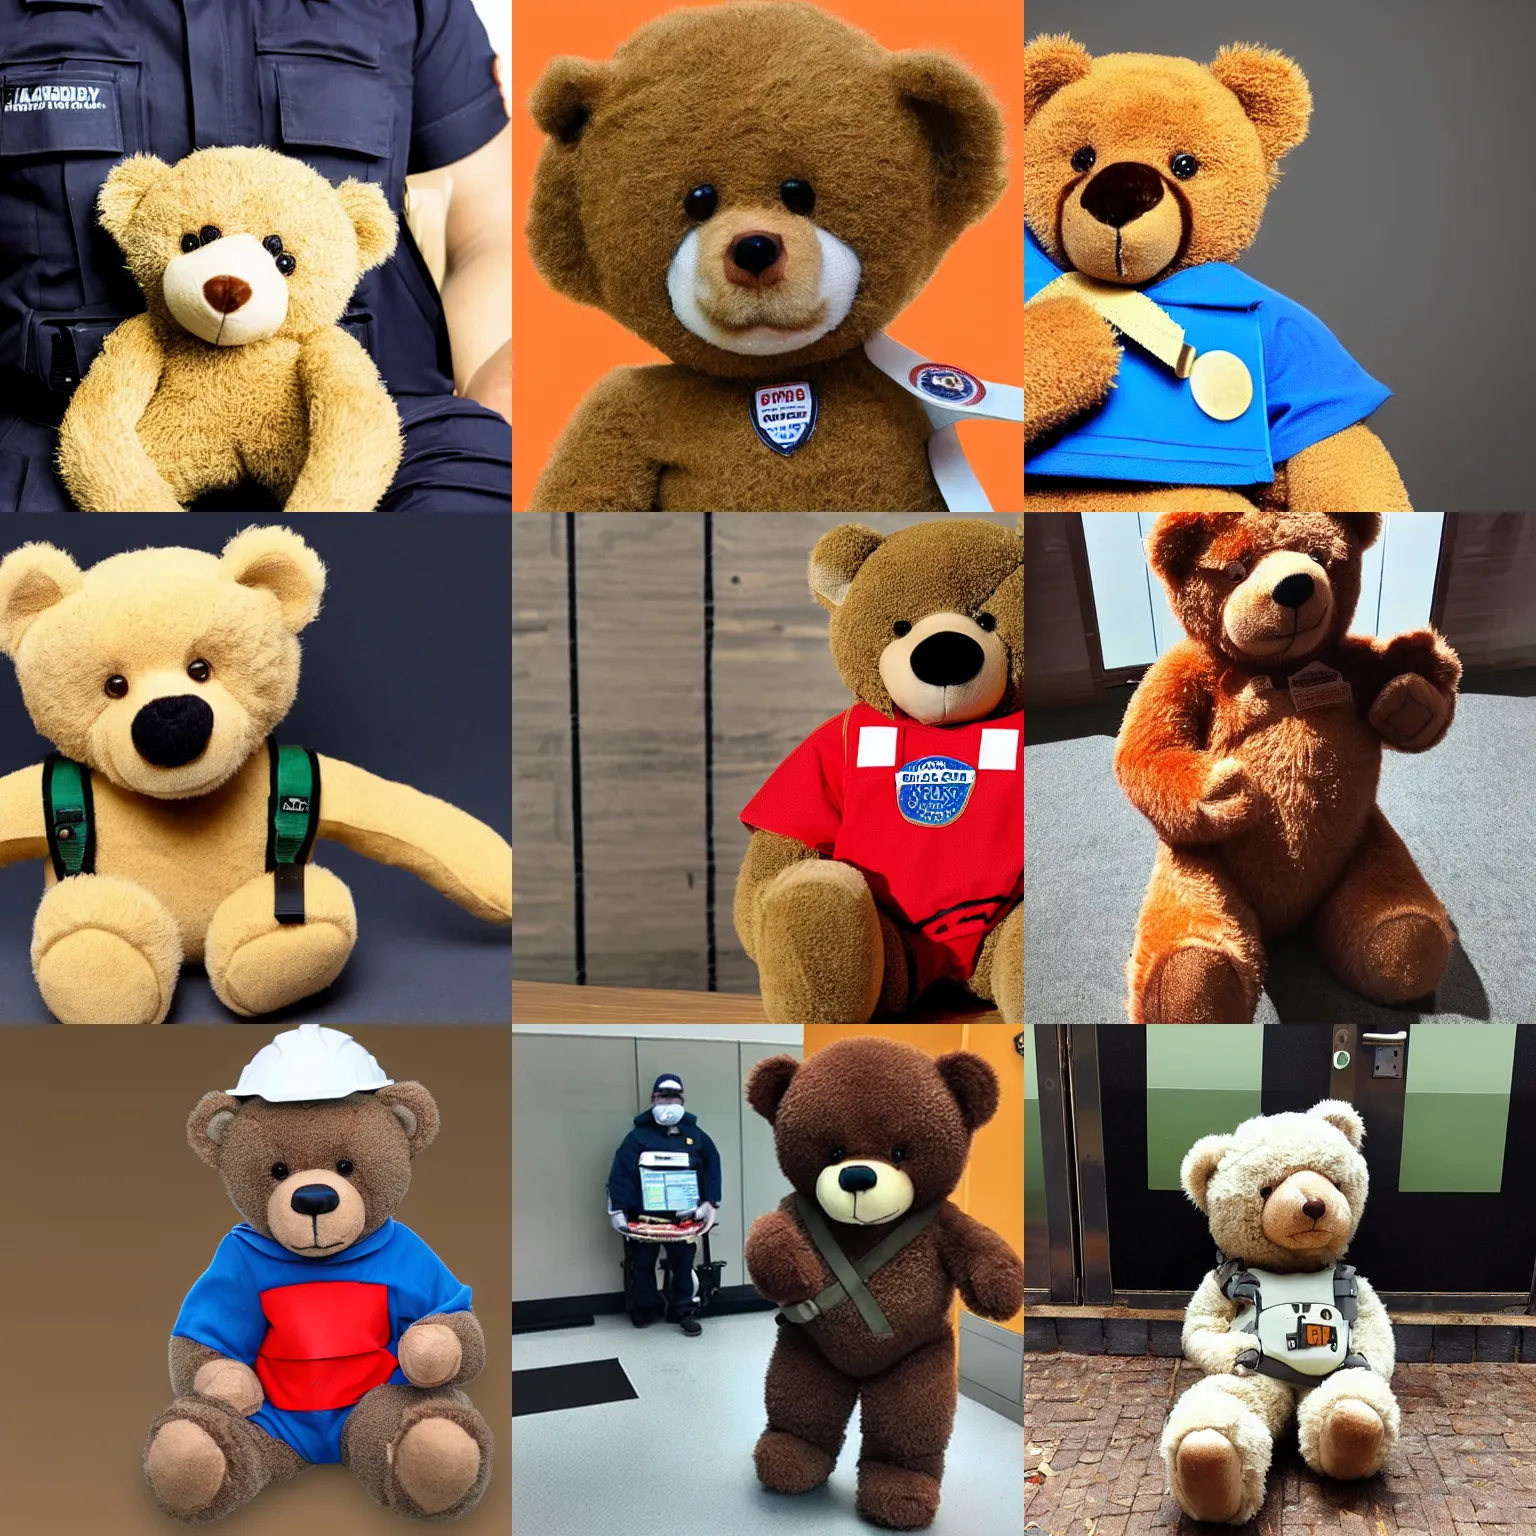 Prompt: a teddy bear in safety uniform